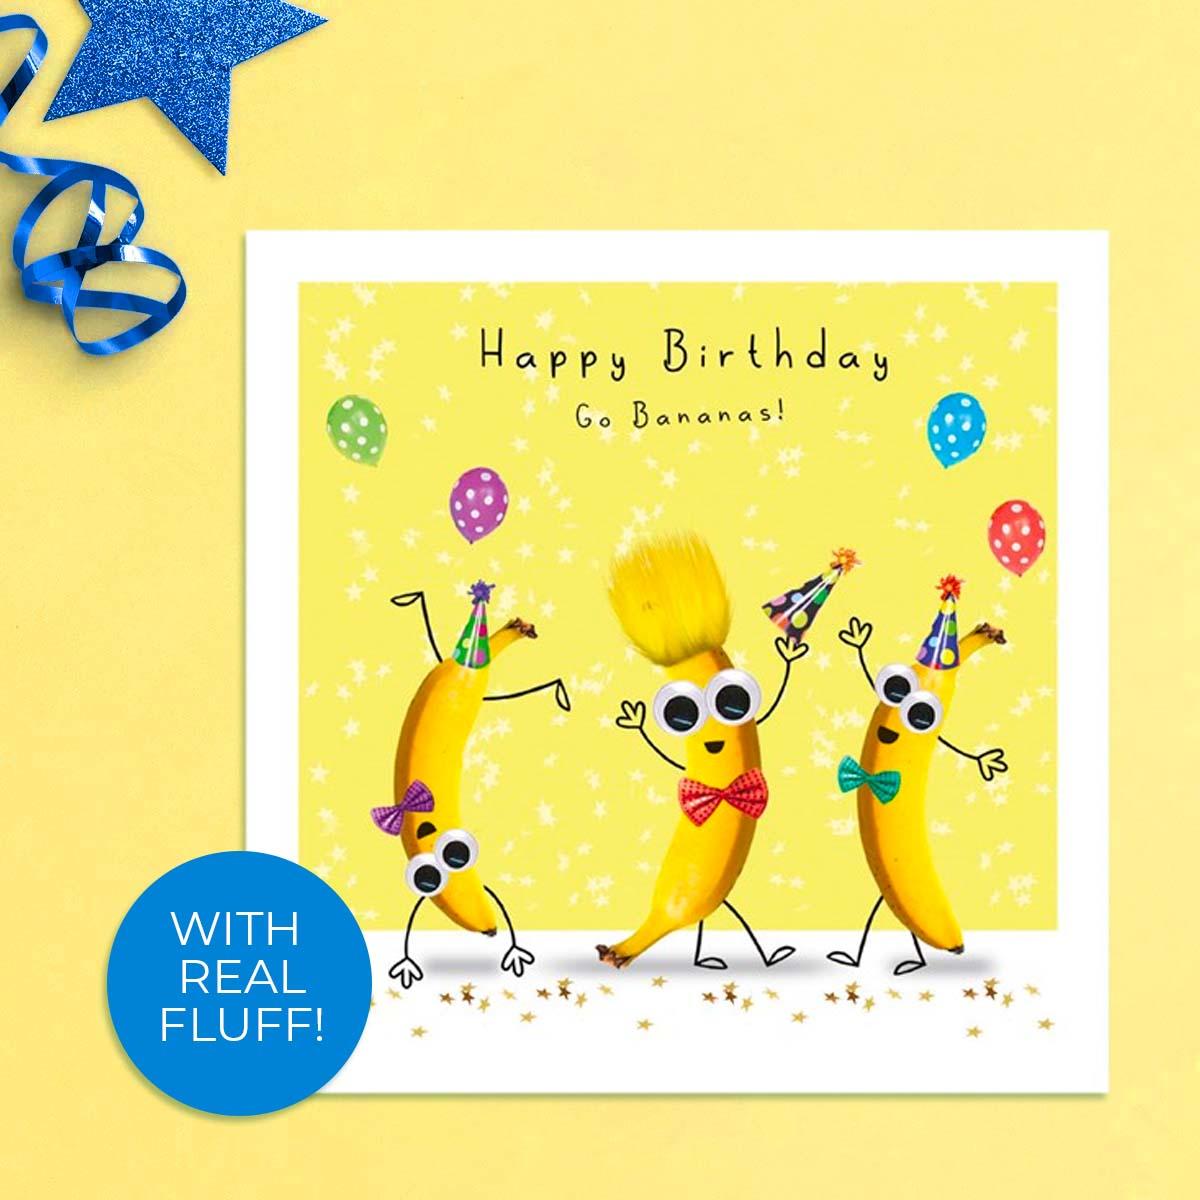 Fluff - Go Bananas Birthday Card